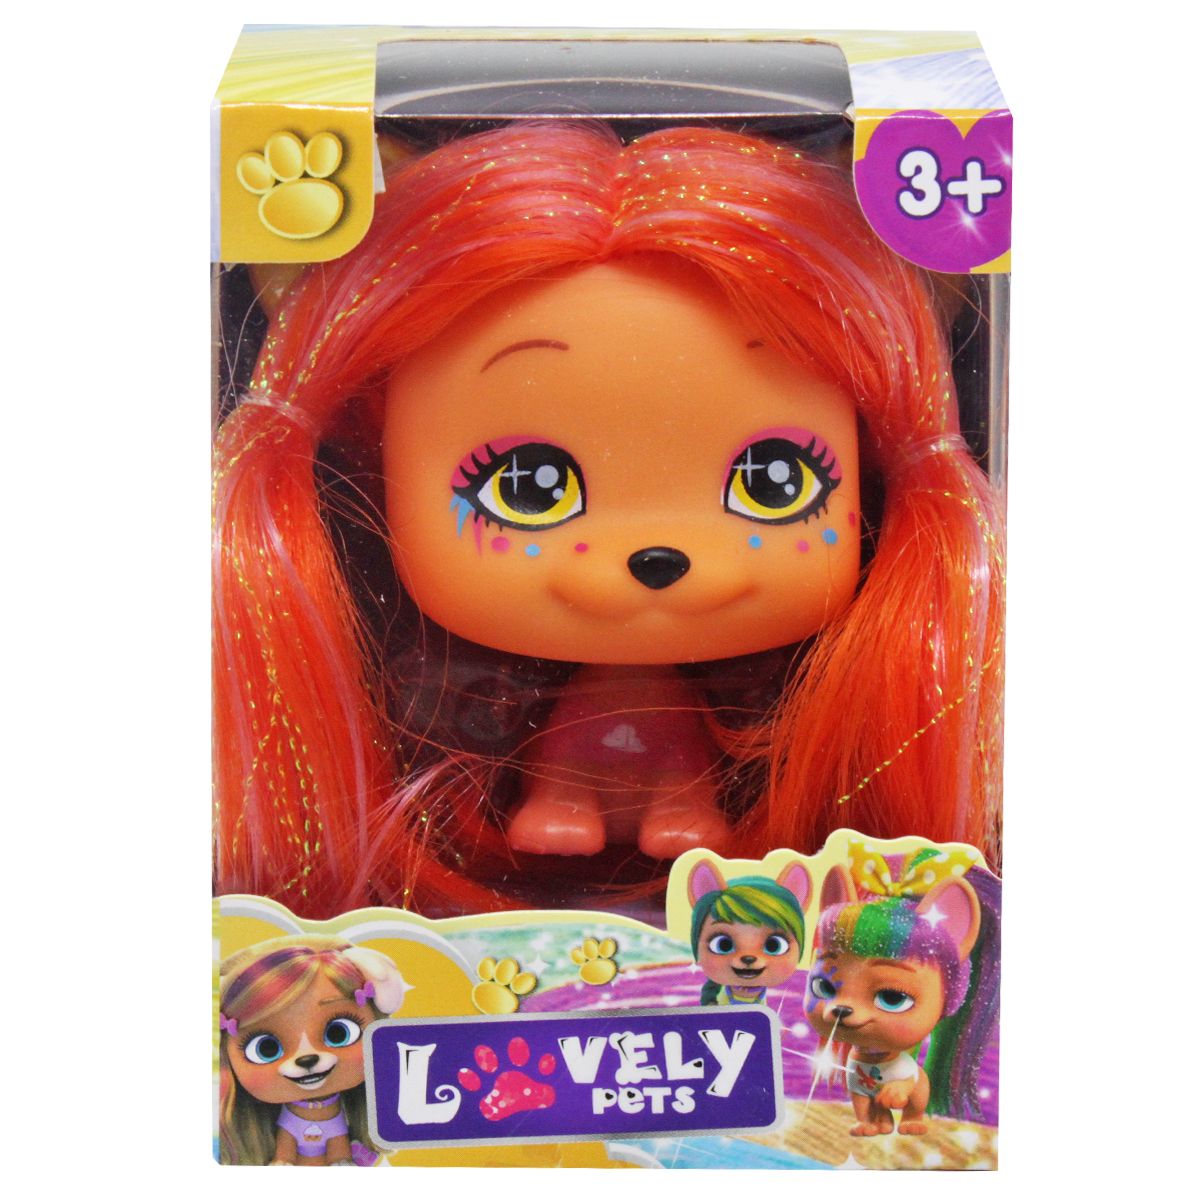 Фігурка "Lovely pets", помаранчевий